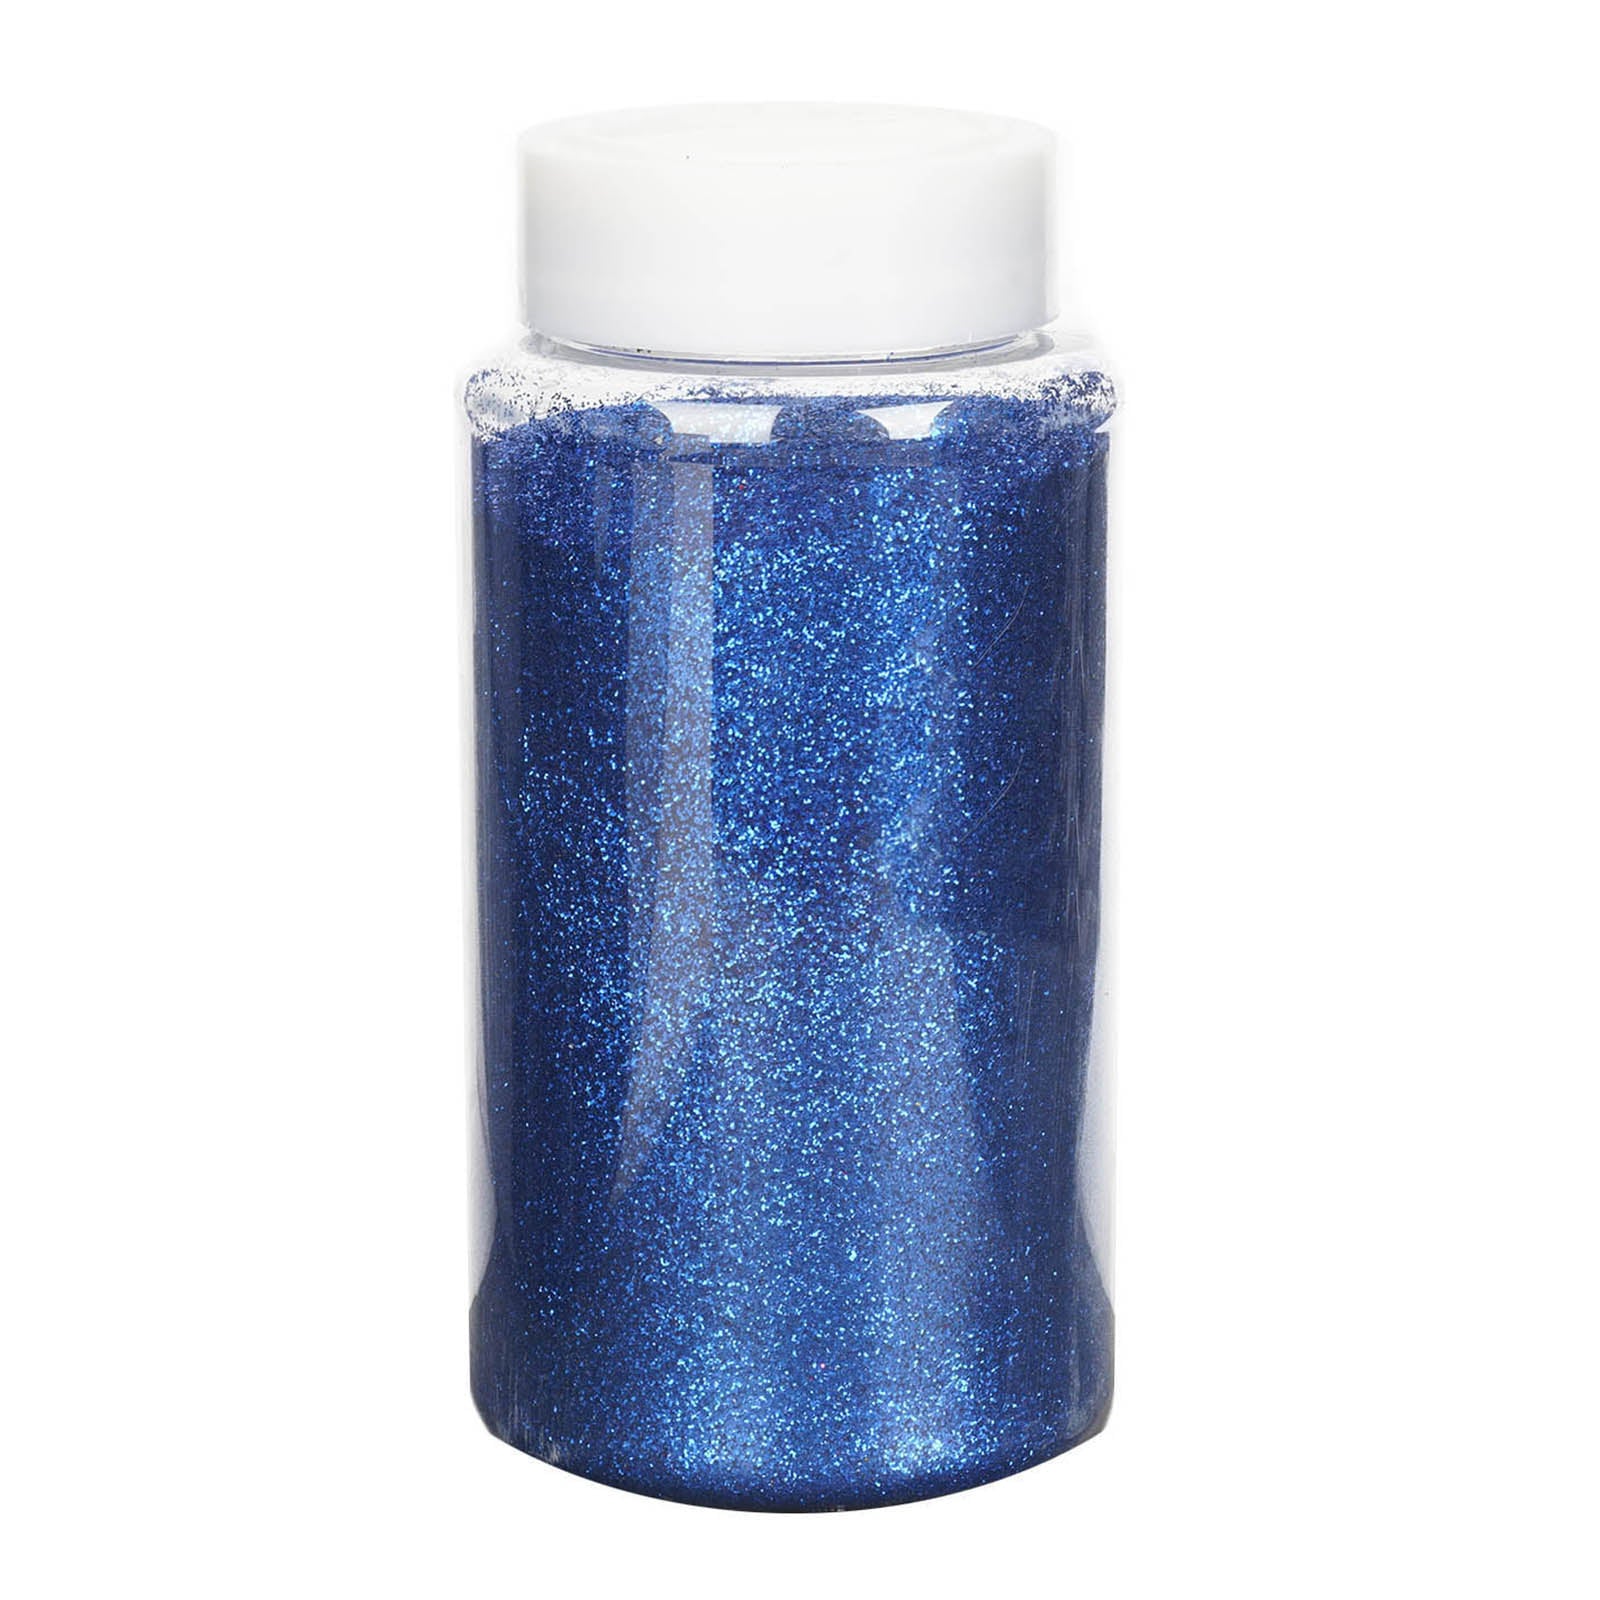 DIY Art & Craft Extra Fine Glitter - 1lb Royal Blue